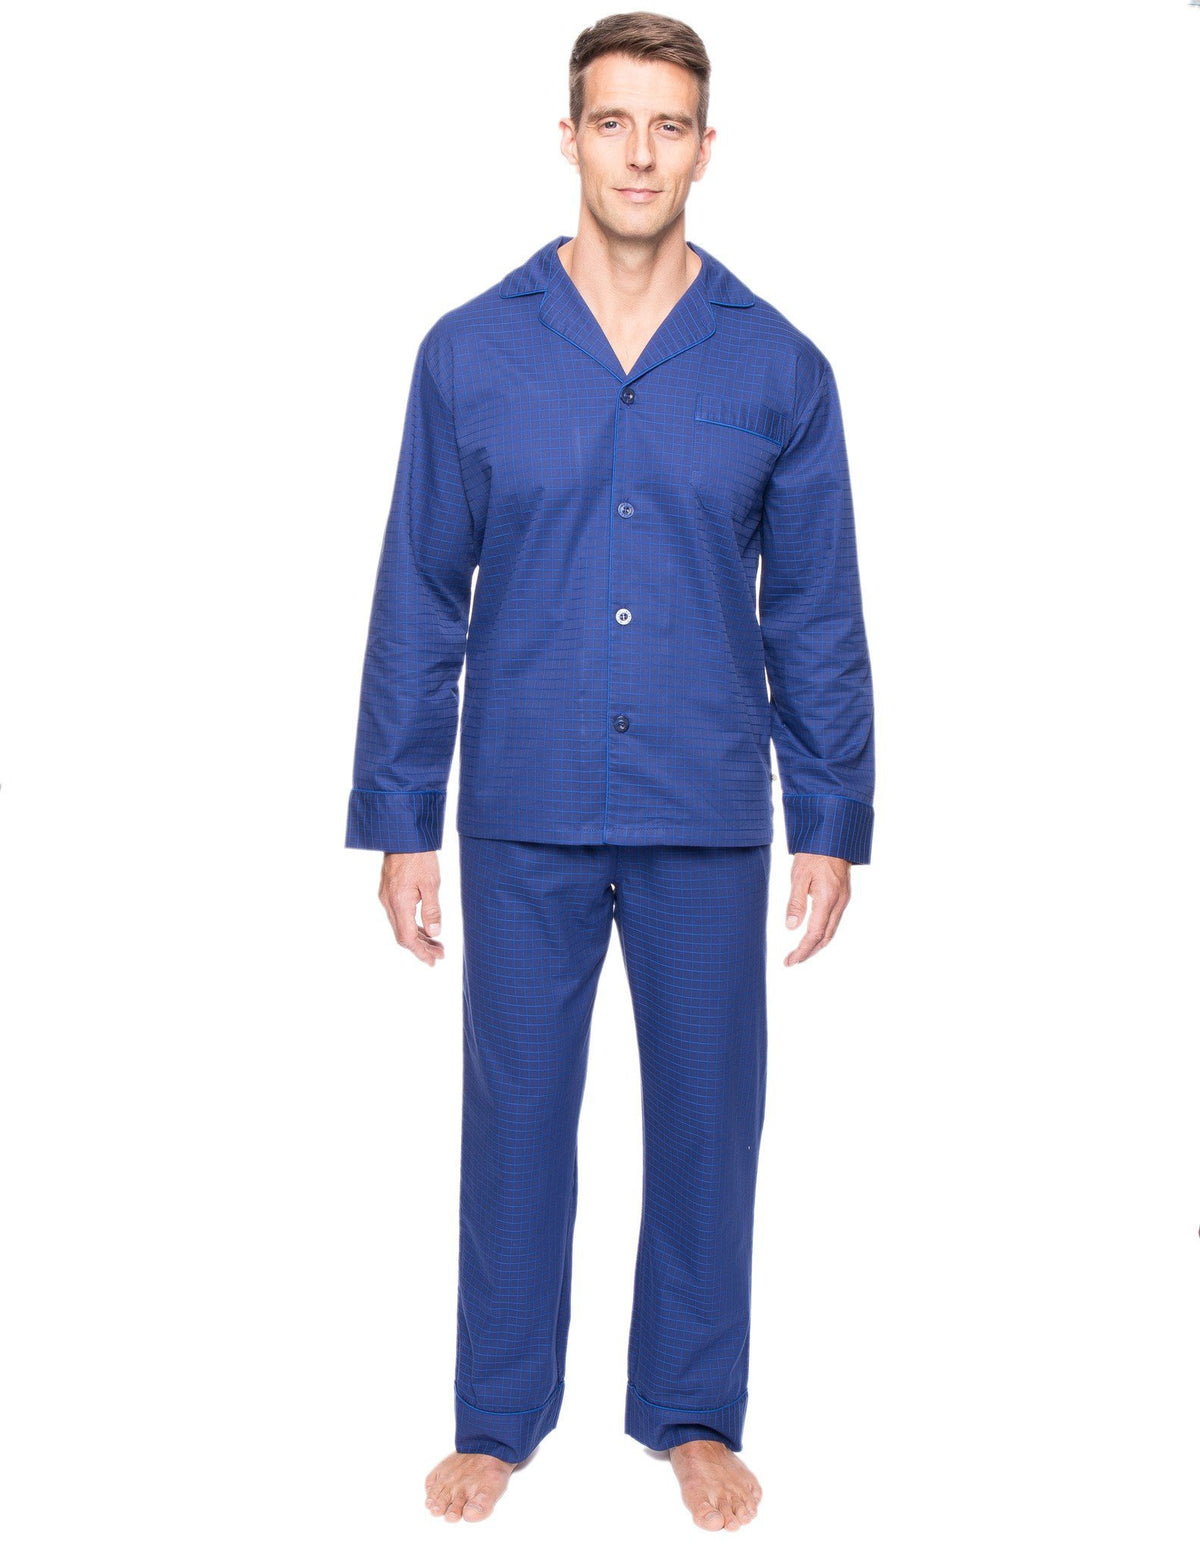 Men's Premium 100% Cotton Woven Pajama Sleepwear Set - Windowpane Checks Navy/Blue